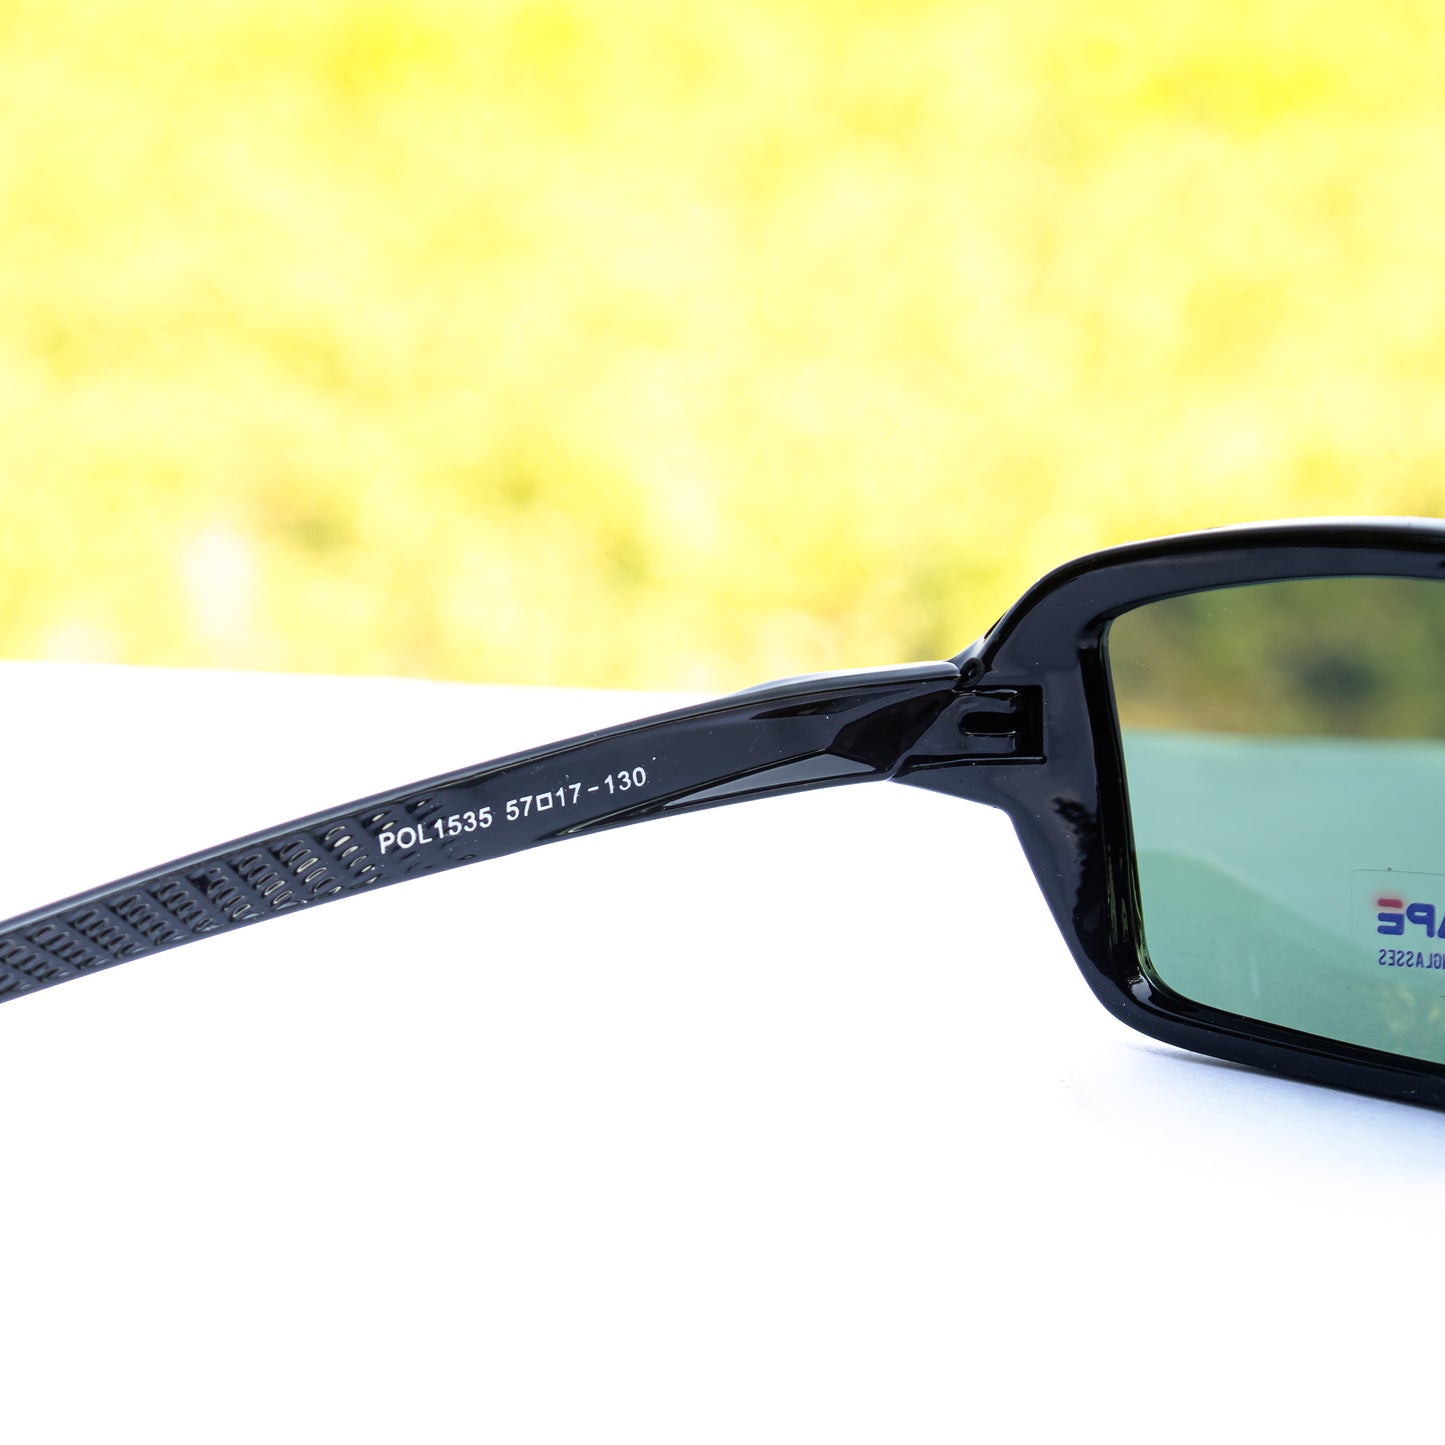 Jiebo Green Polarized Sports Sunglasses